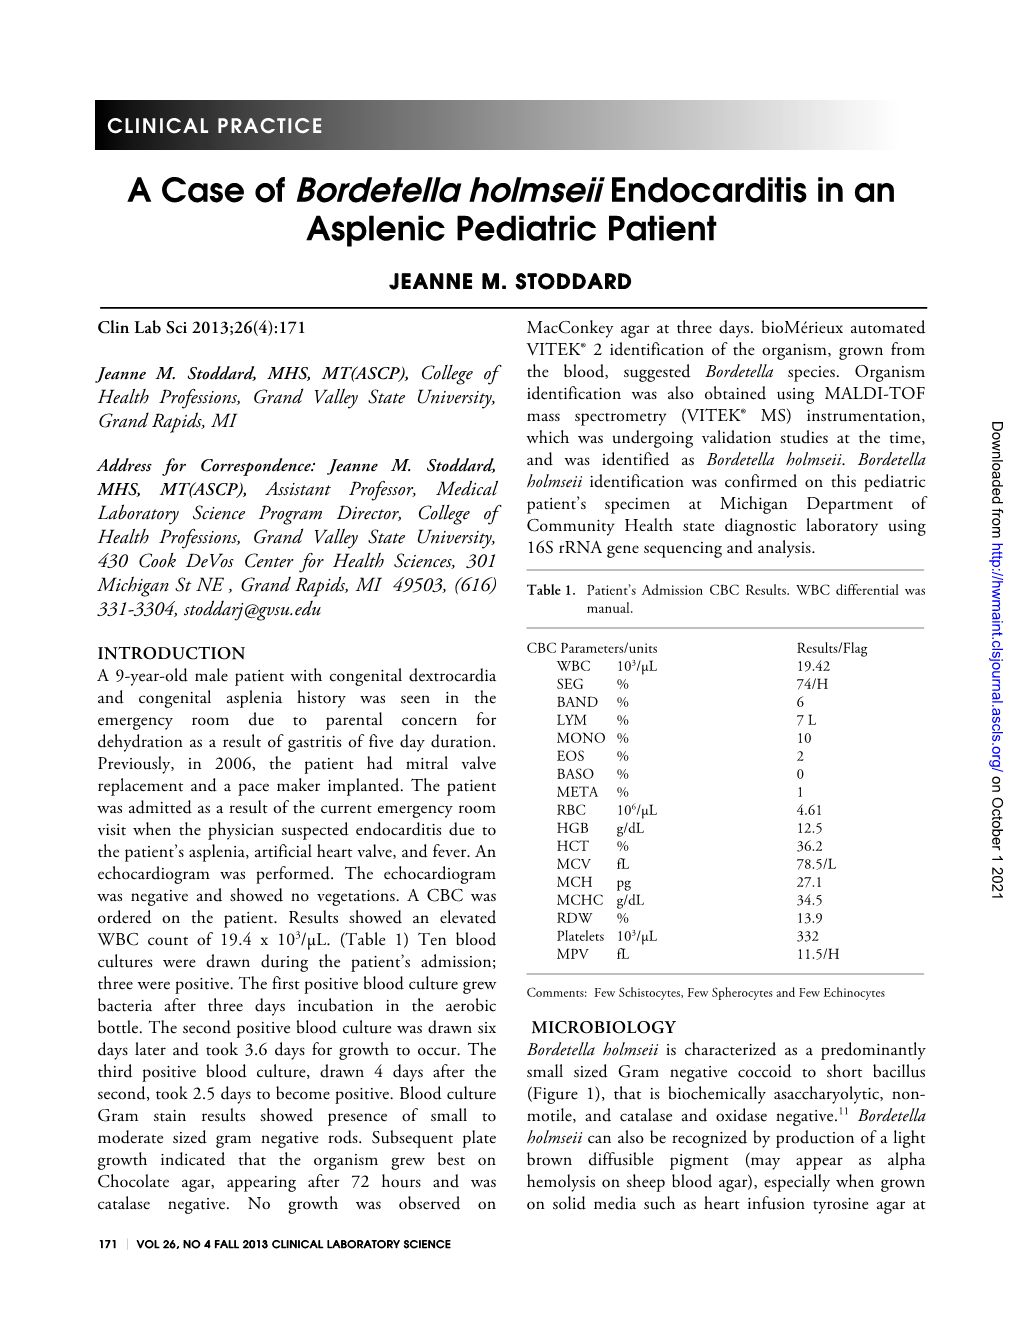 A Case of Bordetella Holmseii Endocarditis in an Asplenic Pediatric Patient